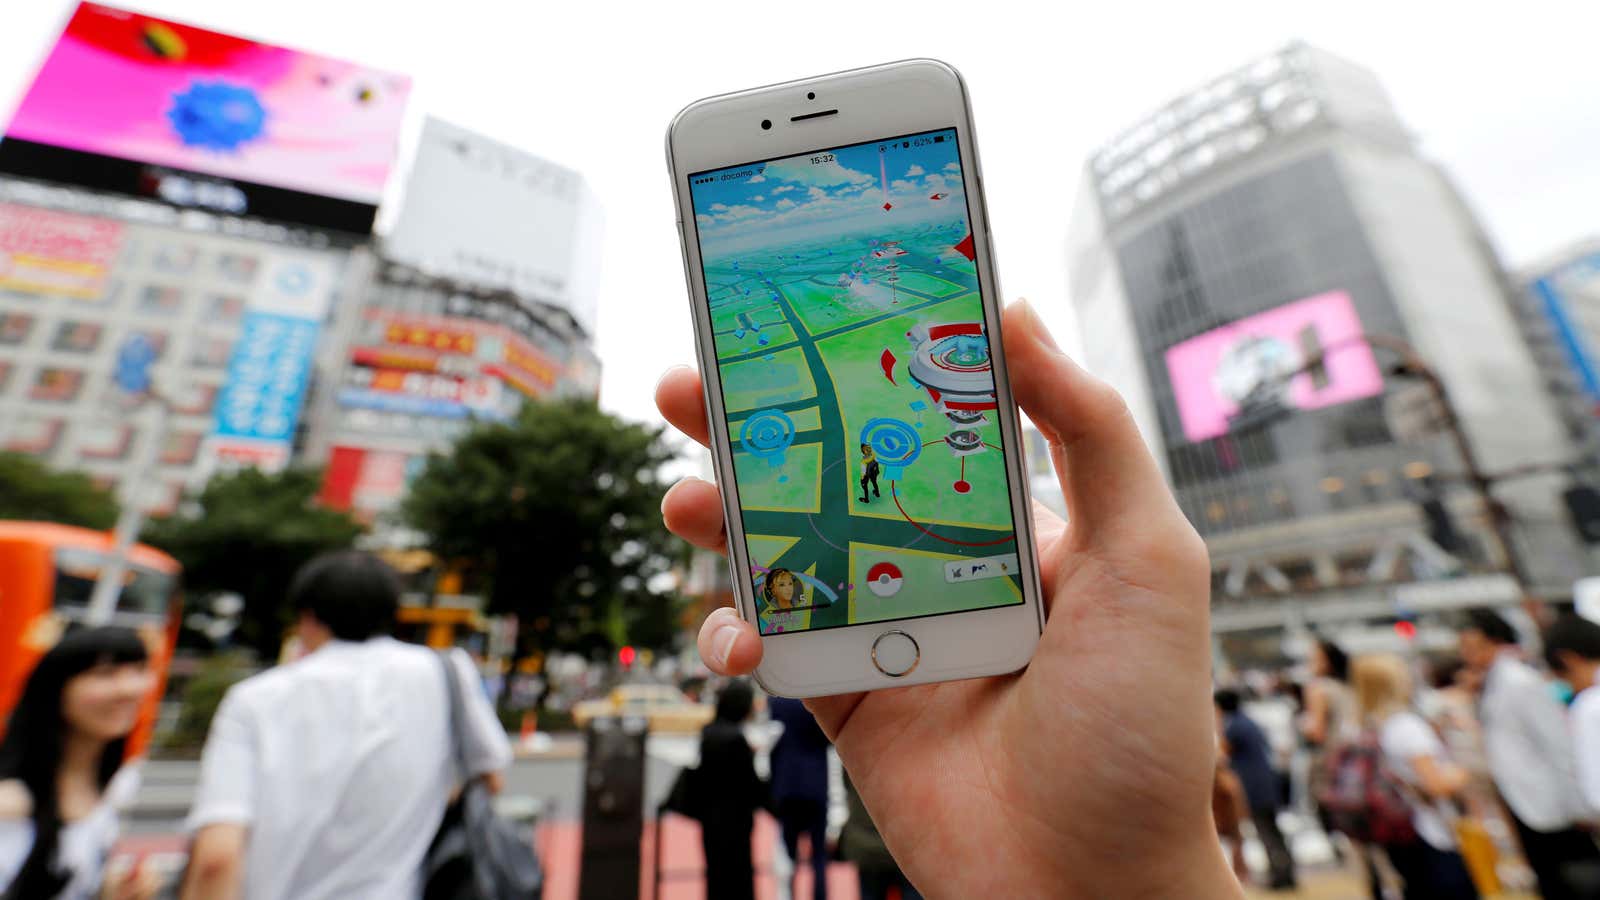 Pokemon Go is raking in revenue from in-app purchases.